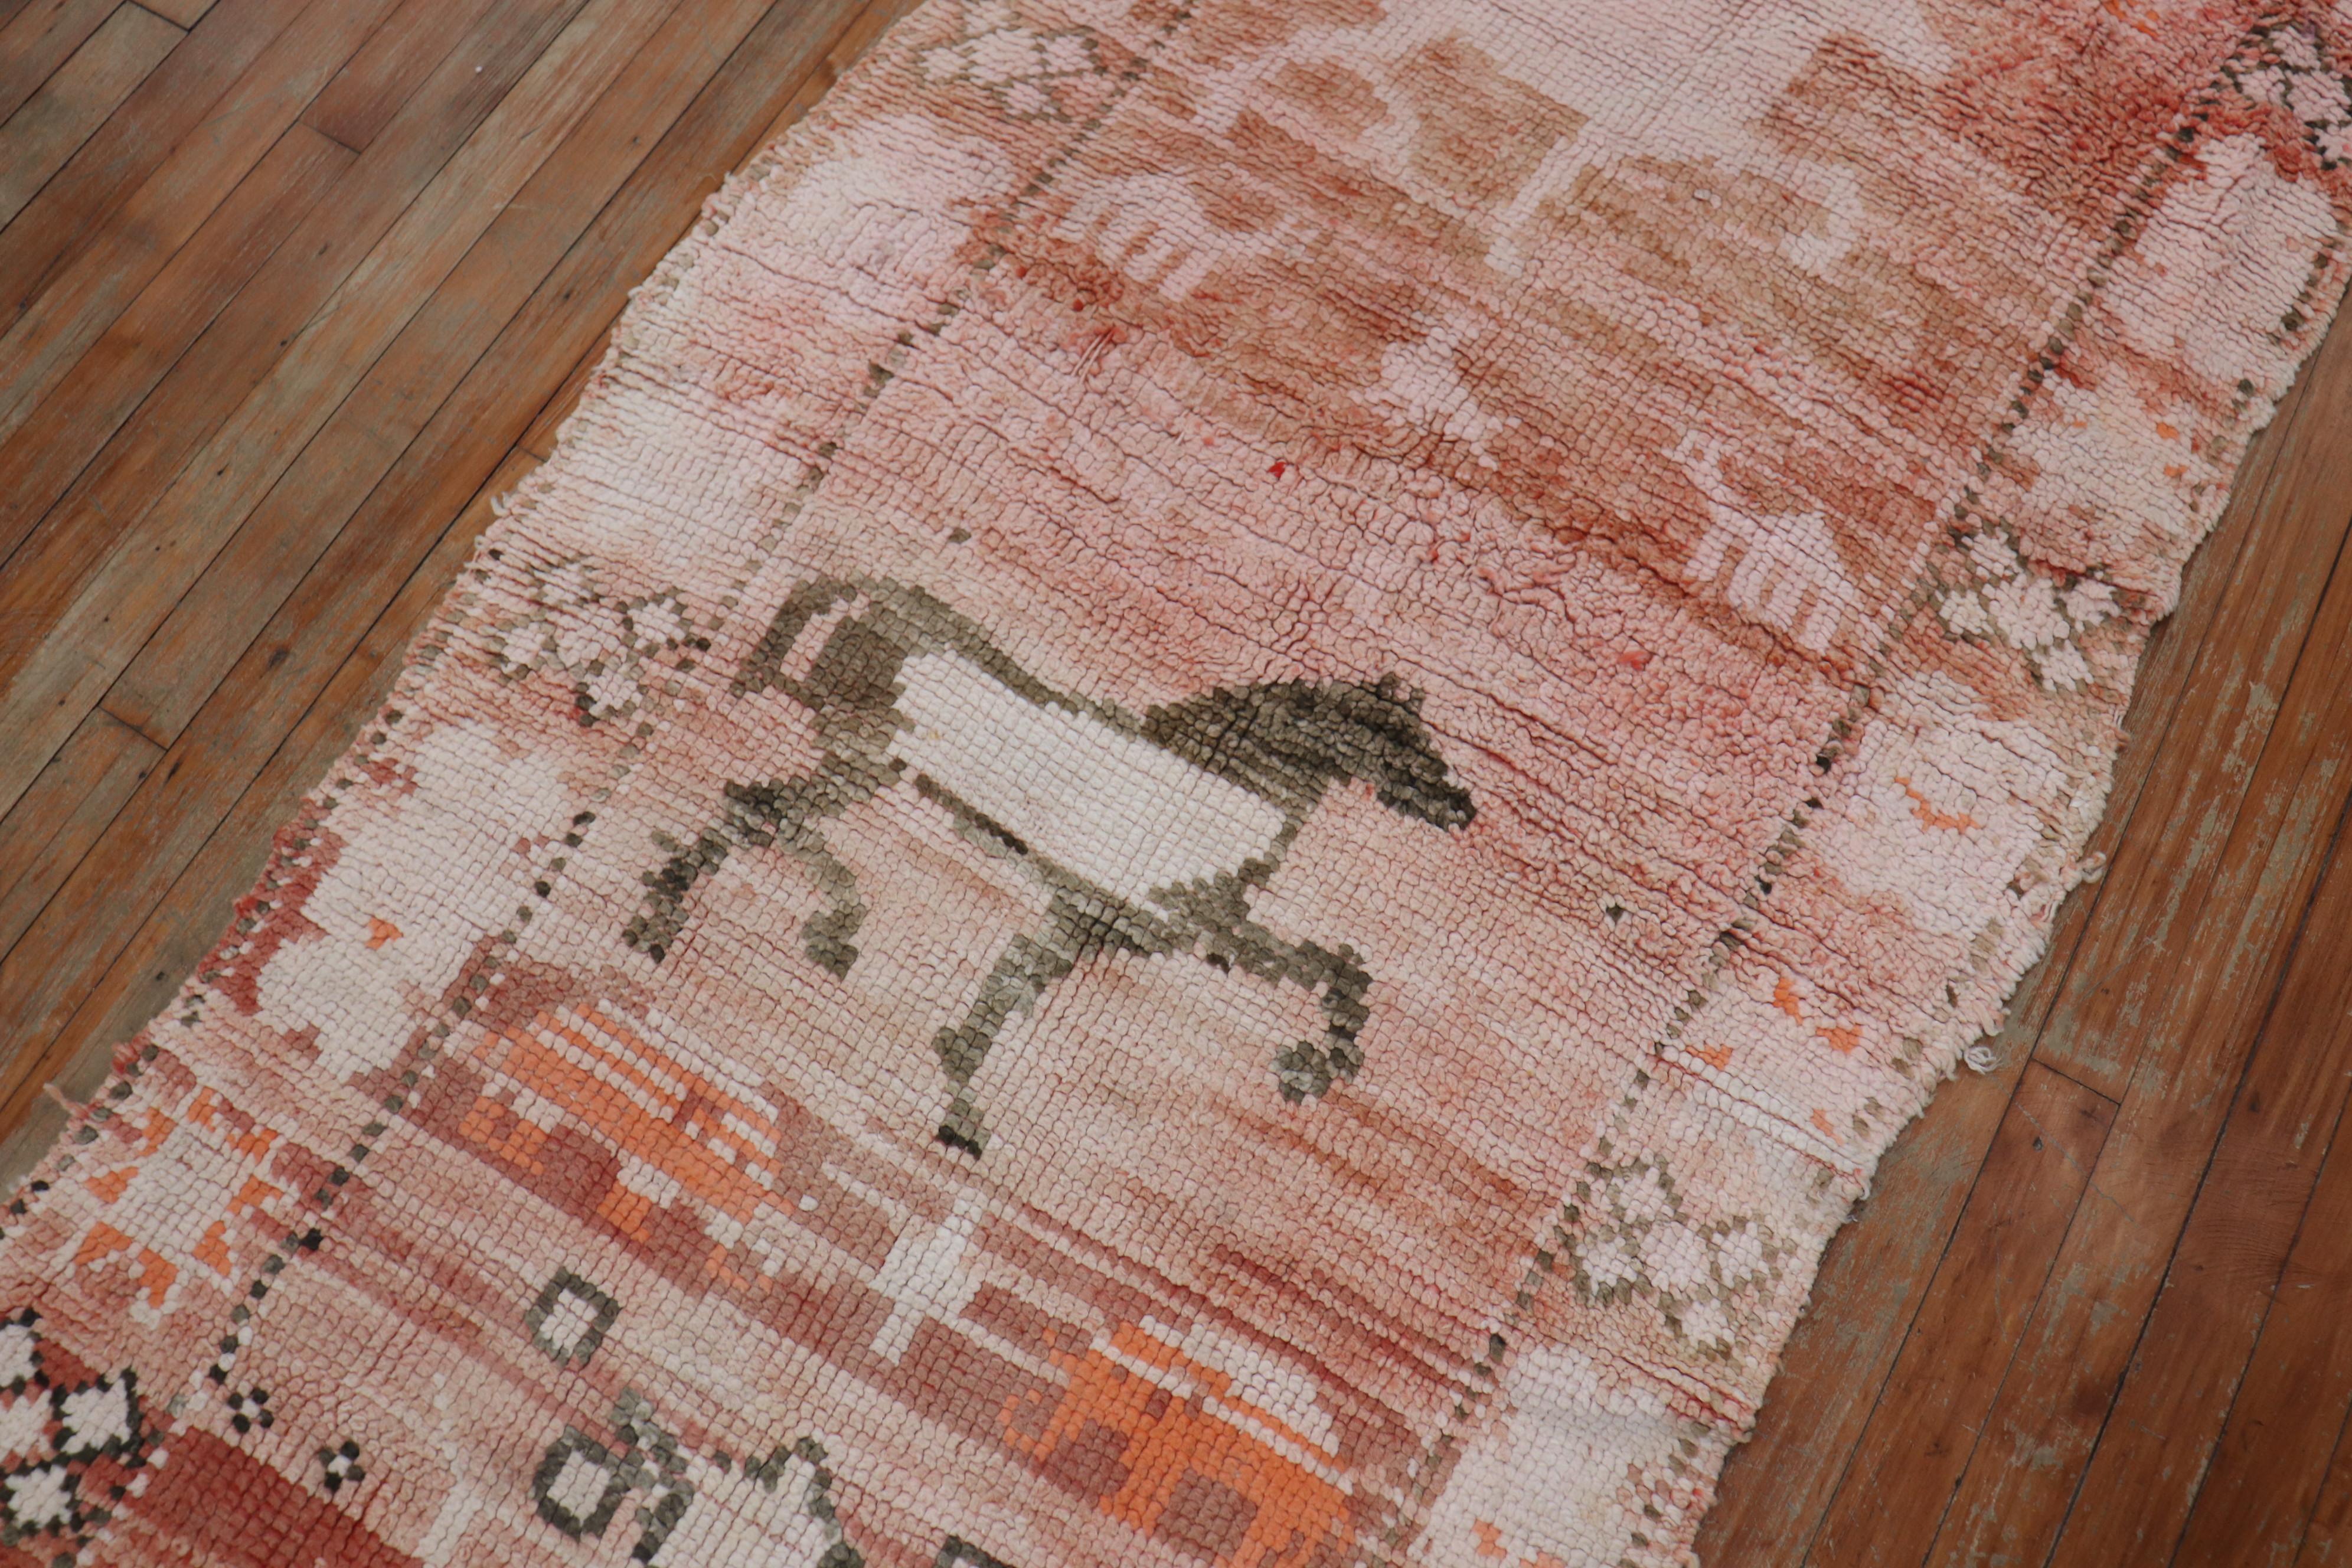 Folk Art Quirky Moroccan Horse Figurative Runner